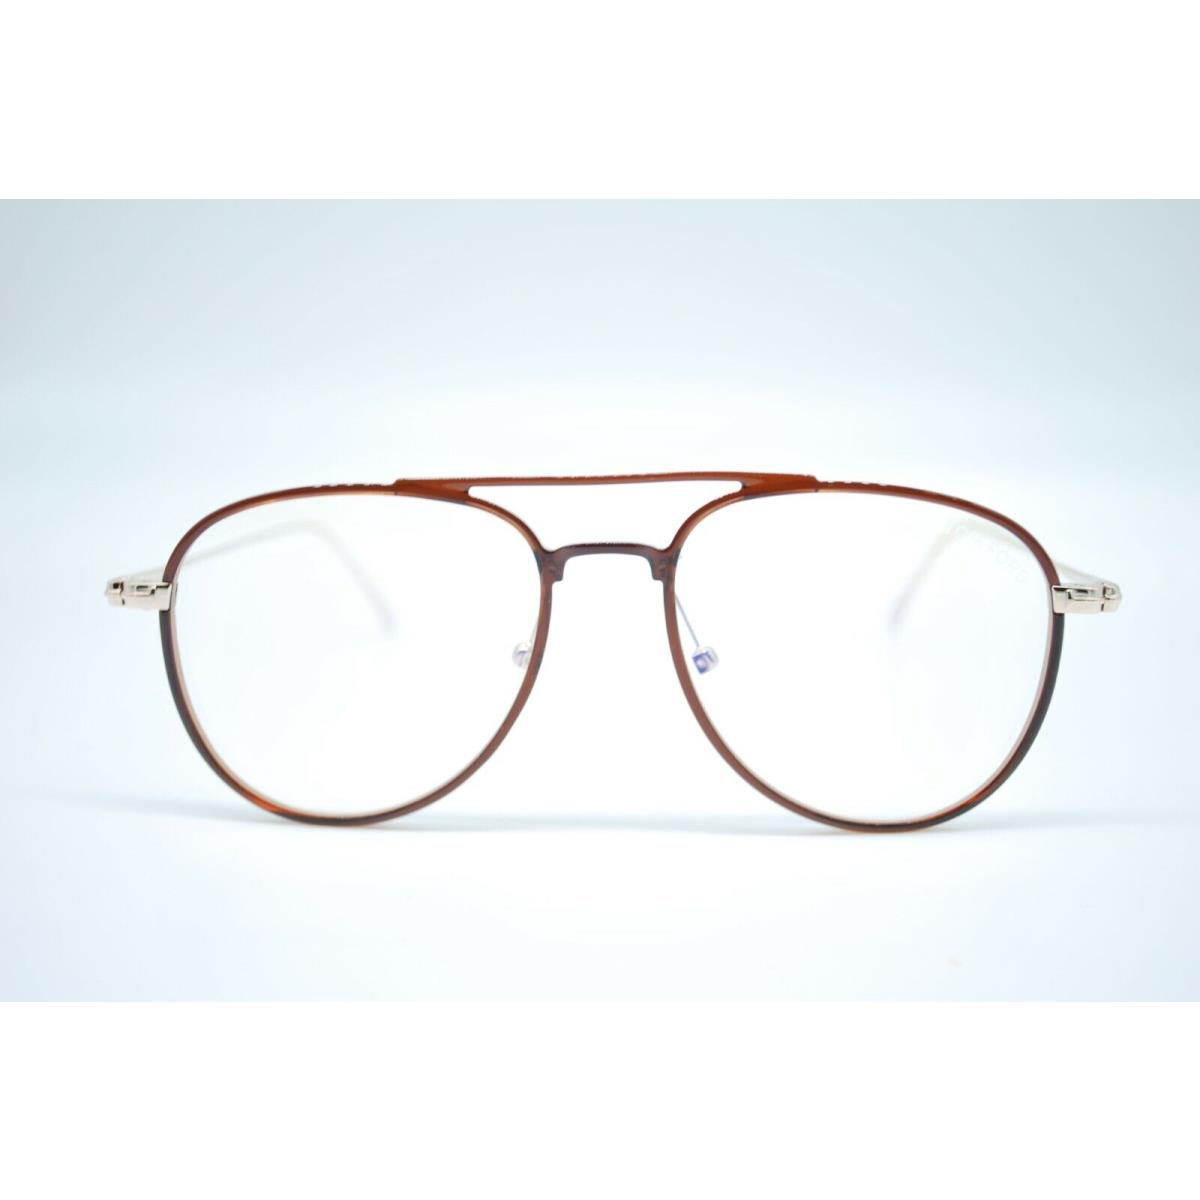 Tom Ford eyeglasses  - BROWN ROSE GOLD Frame 1